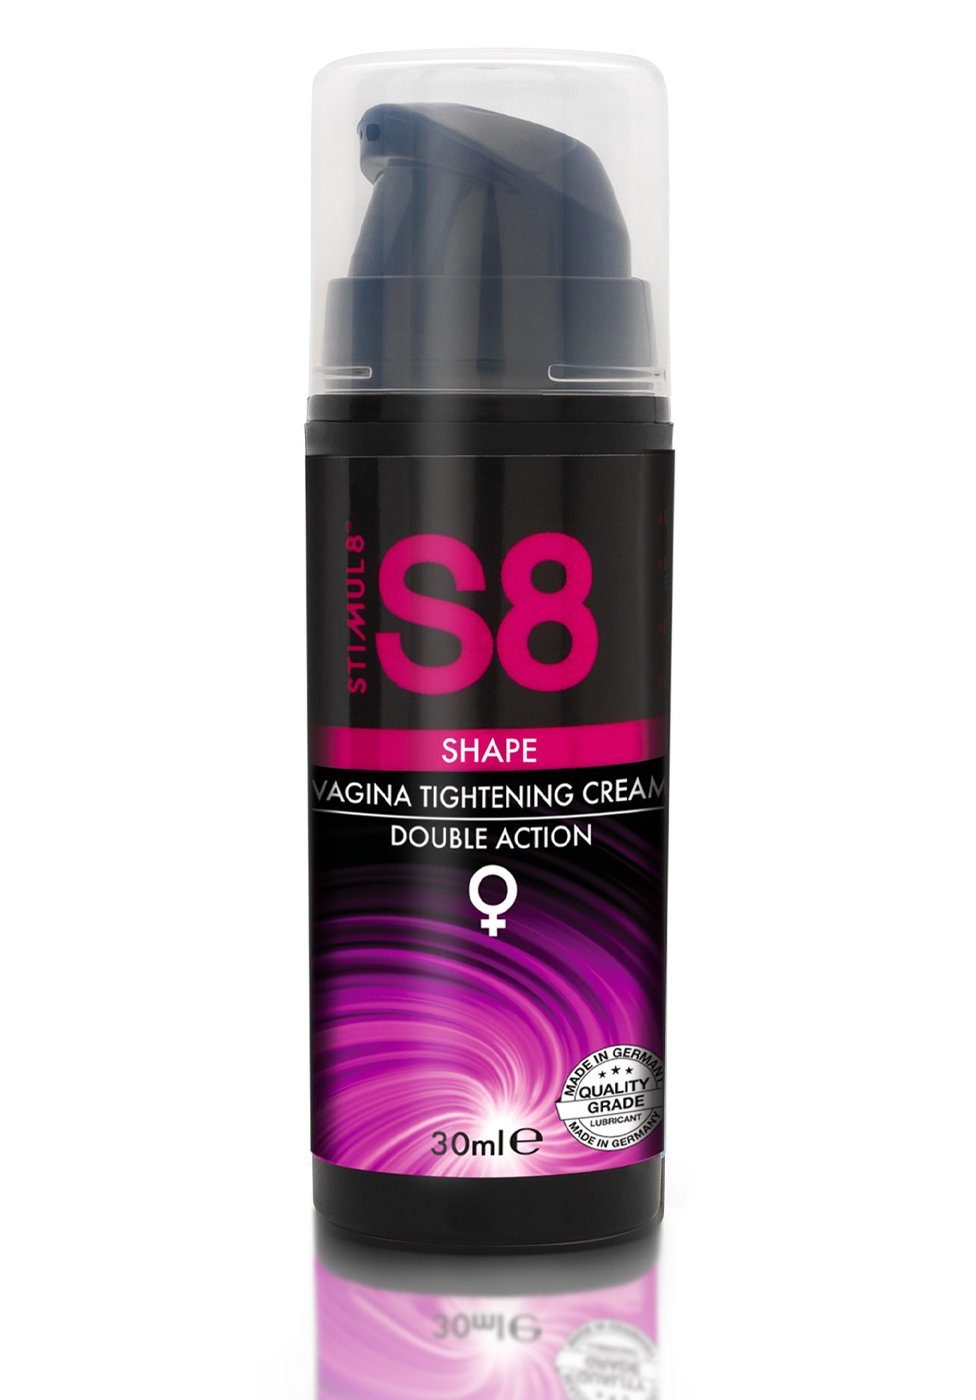 Stimul8 S8 Stimulationsgel Vagina Tightening Creme Shape - 30 ml